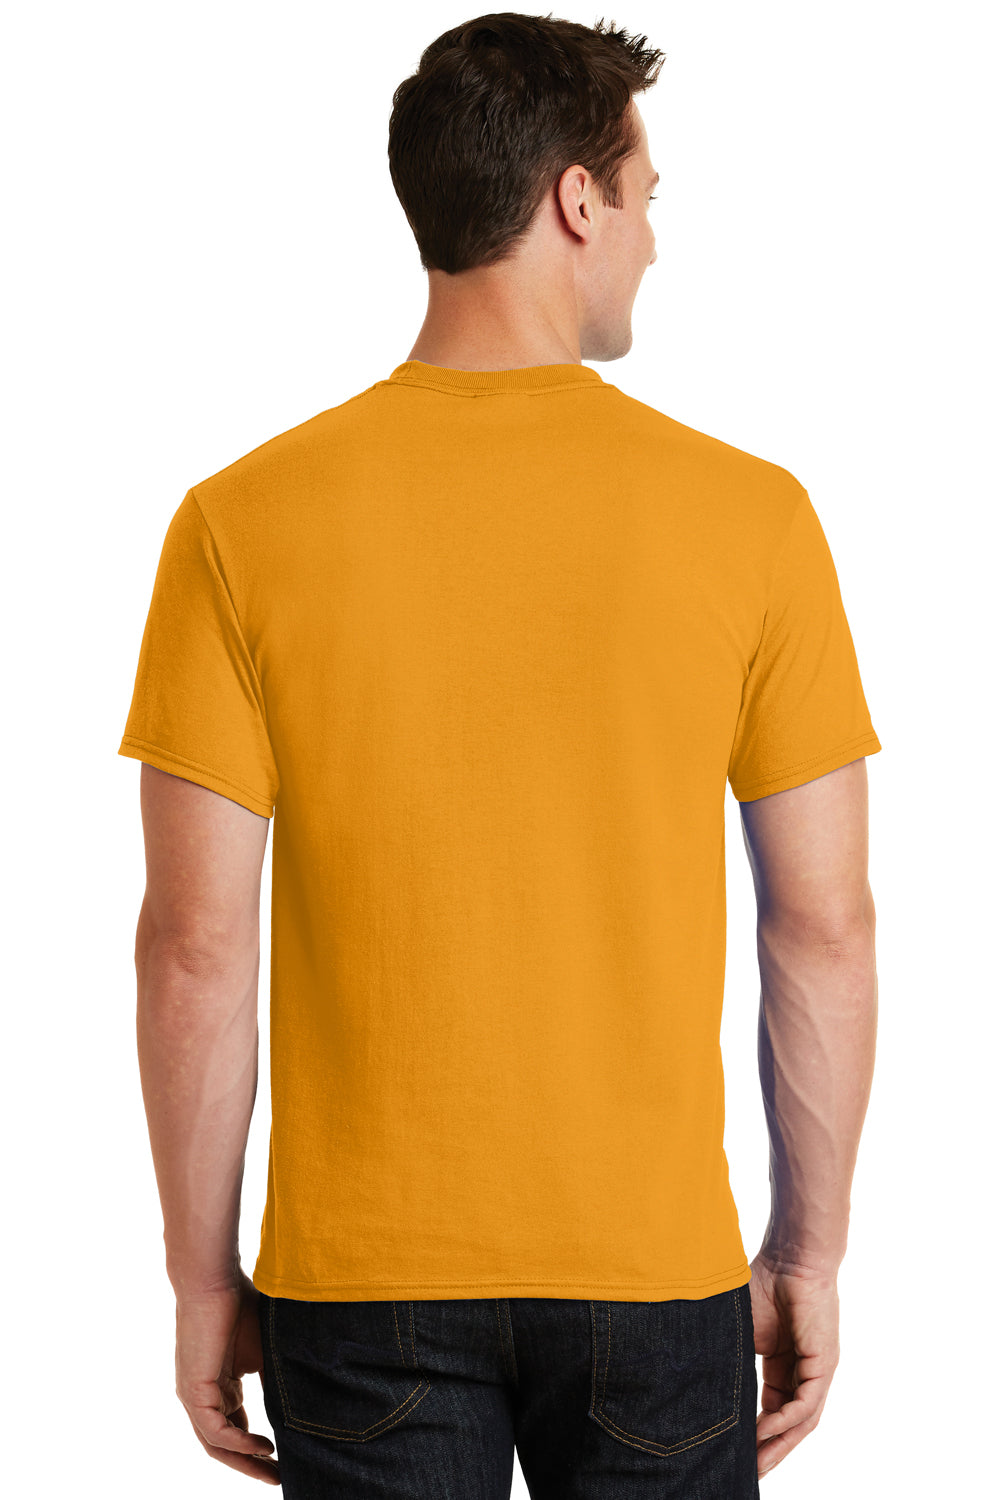 Port & Company PC55 Mens Core Short Sleeve Crewneck T-Shirt Gold Back